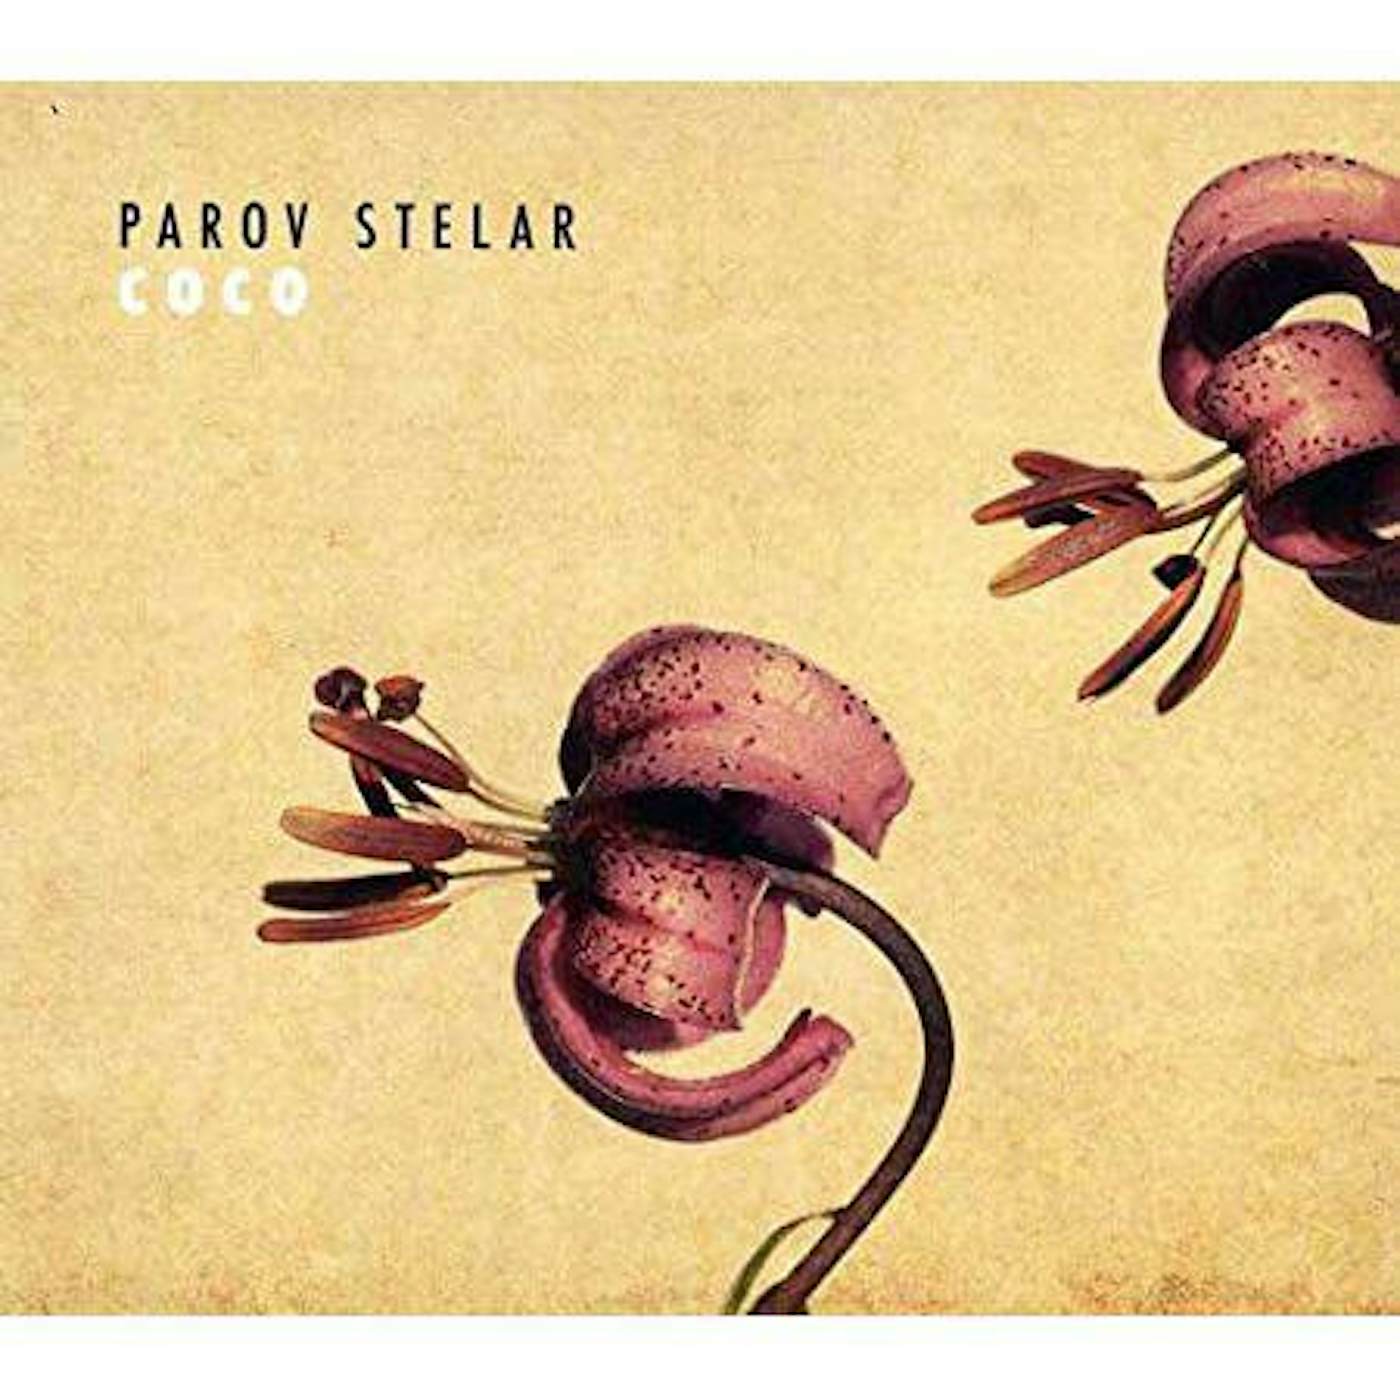 Parov Stelar Coco (Limited Edition 180 Gr. White Vinyl Vinyl Record